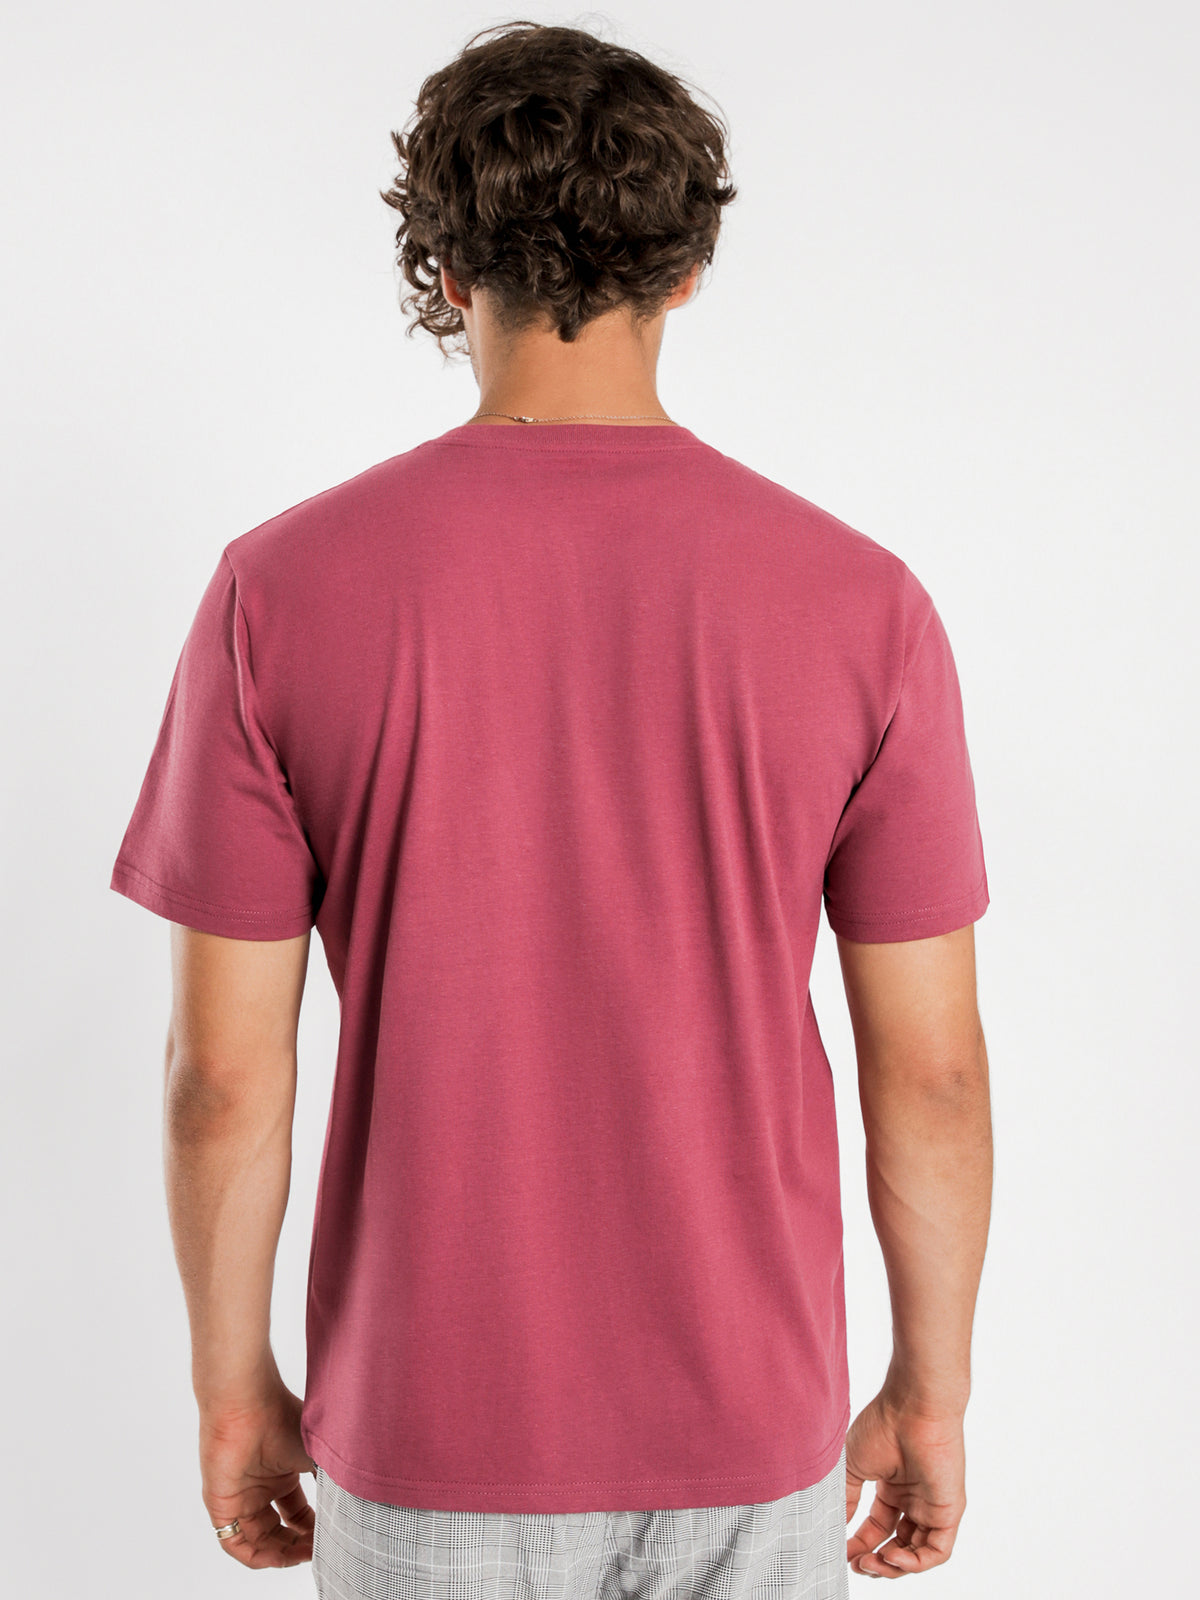 Pocket Short Sleeve T-Shirt in Fuchsia